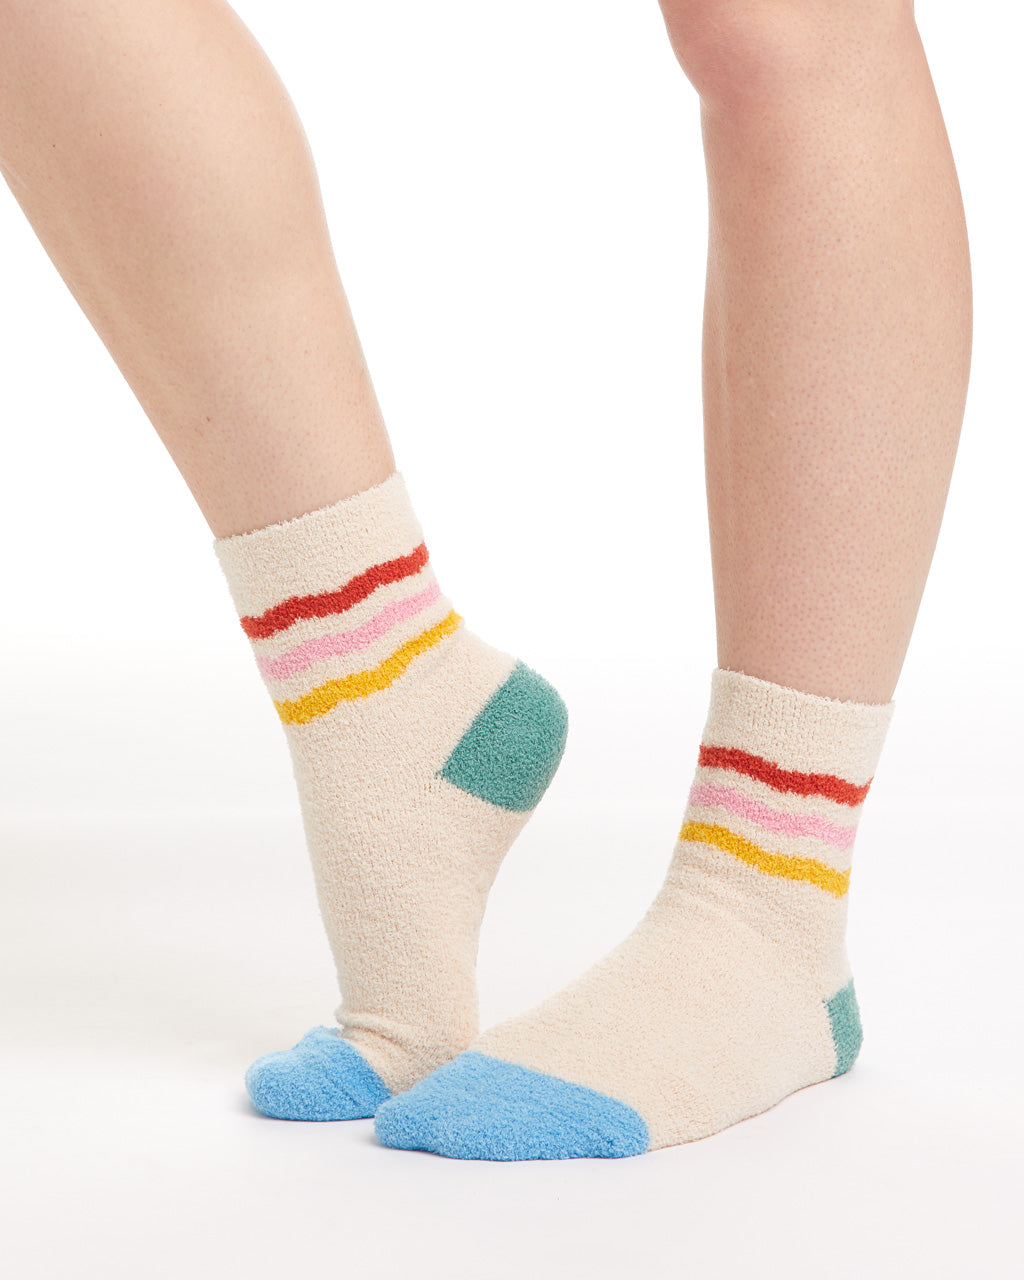 socks that have grip